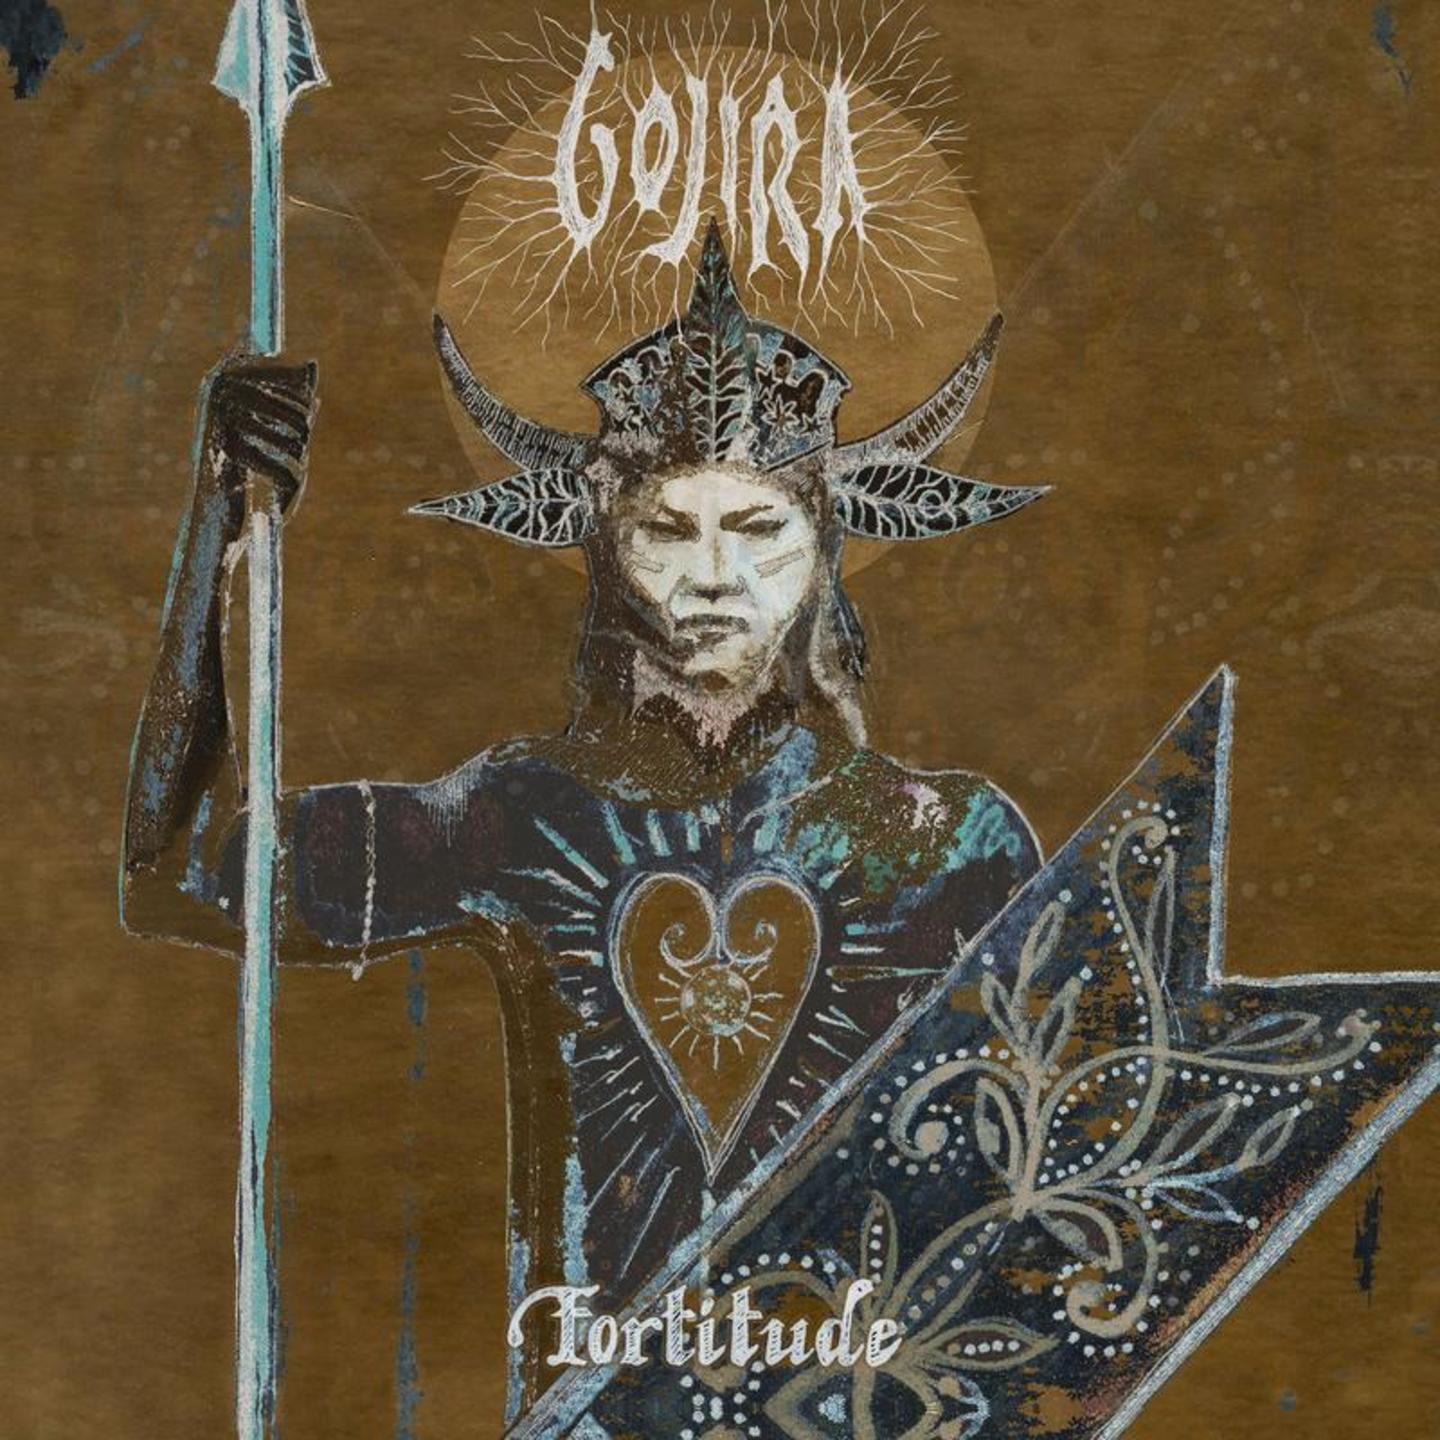 GOJIRA - Fortitude LP Black Ice vinyl